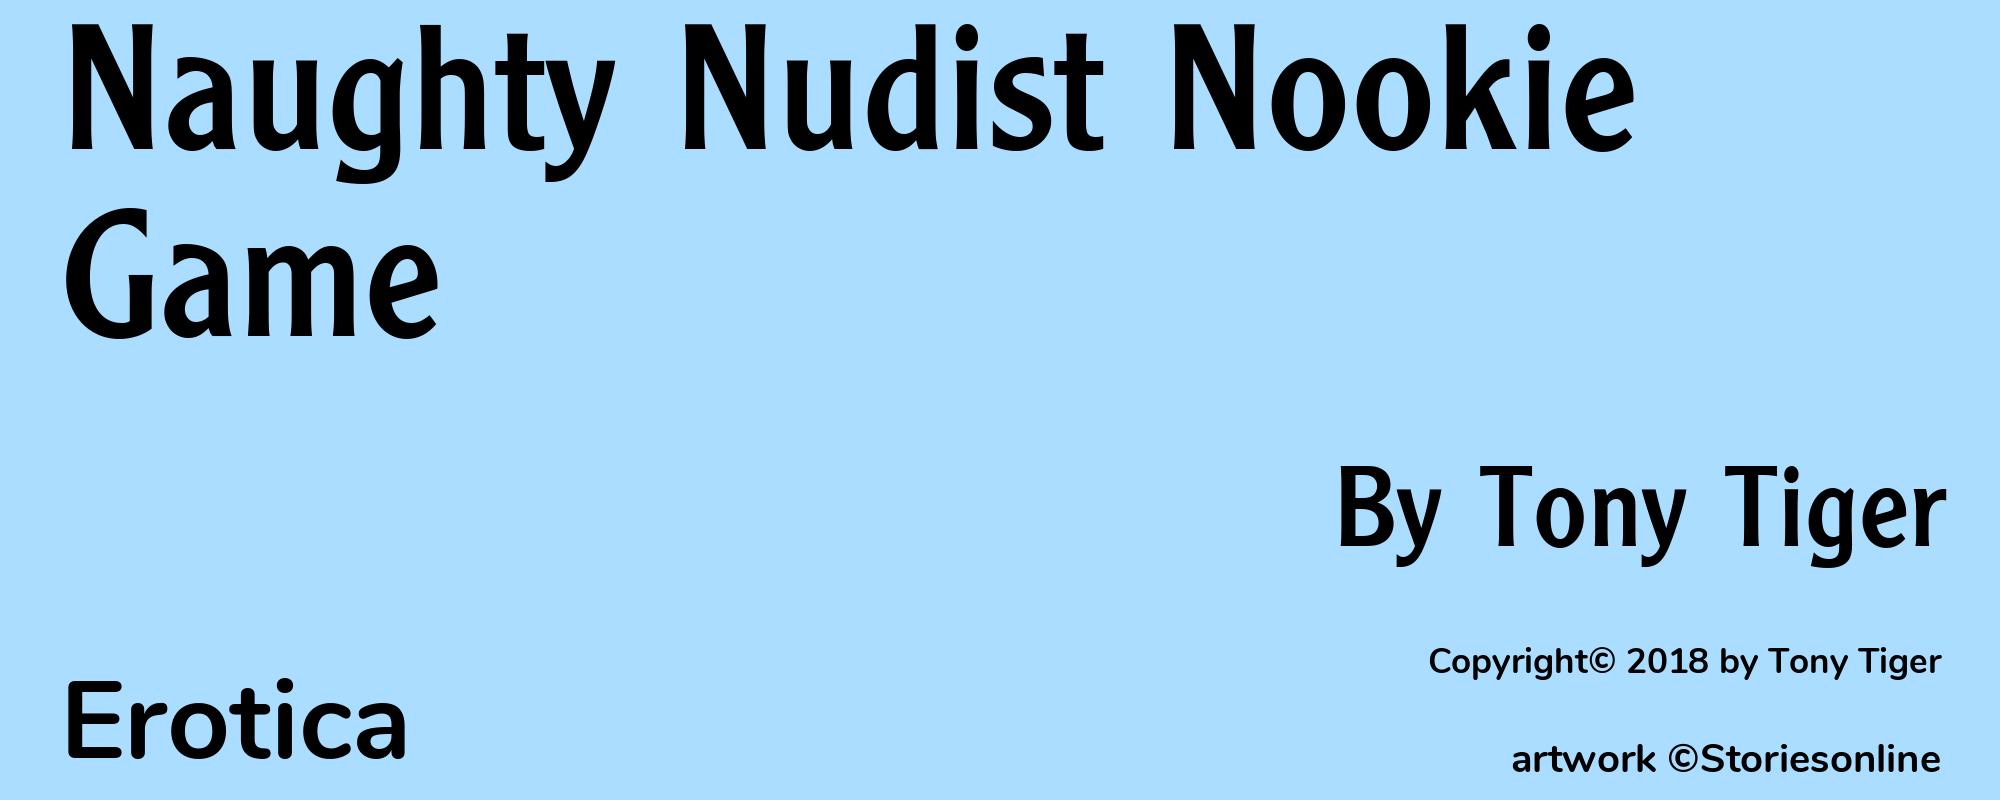 Naughty Nudist Nookie Game - Cover